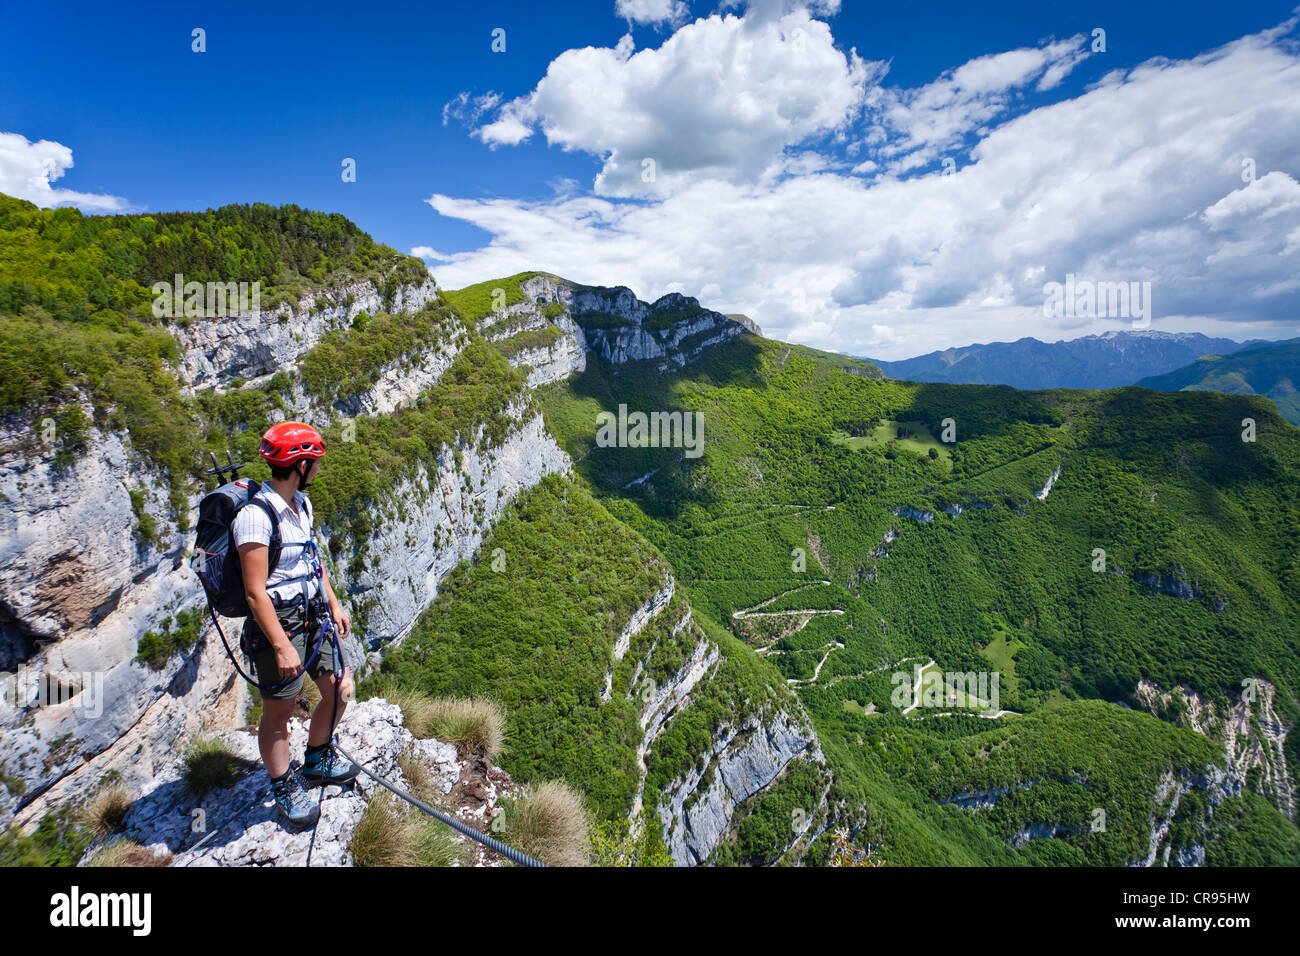 Climber near the Gerardo Sega fixed rope route on Mounte Baldo mountain above Avio, Lake Garda region, province of Trento, Italy Stock Photo